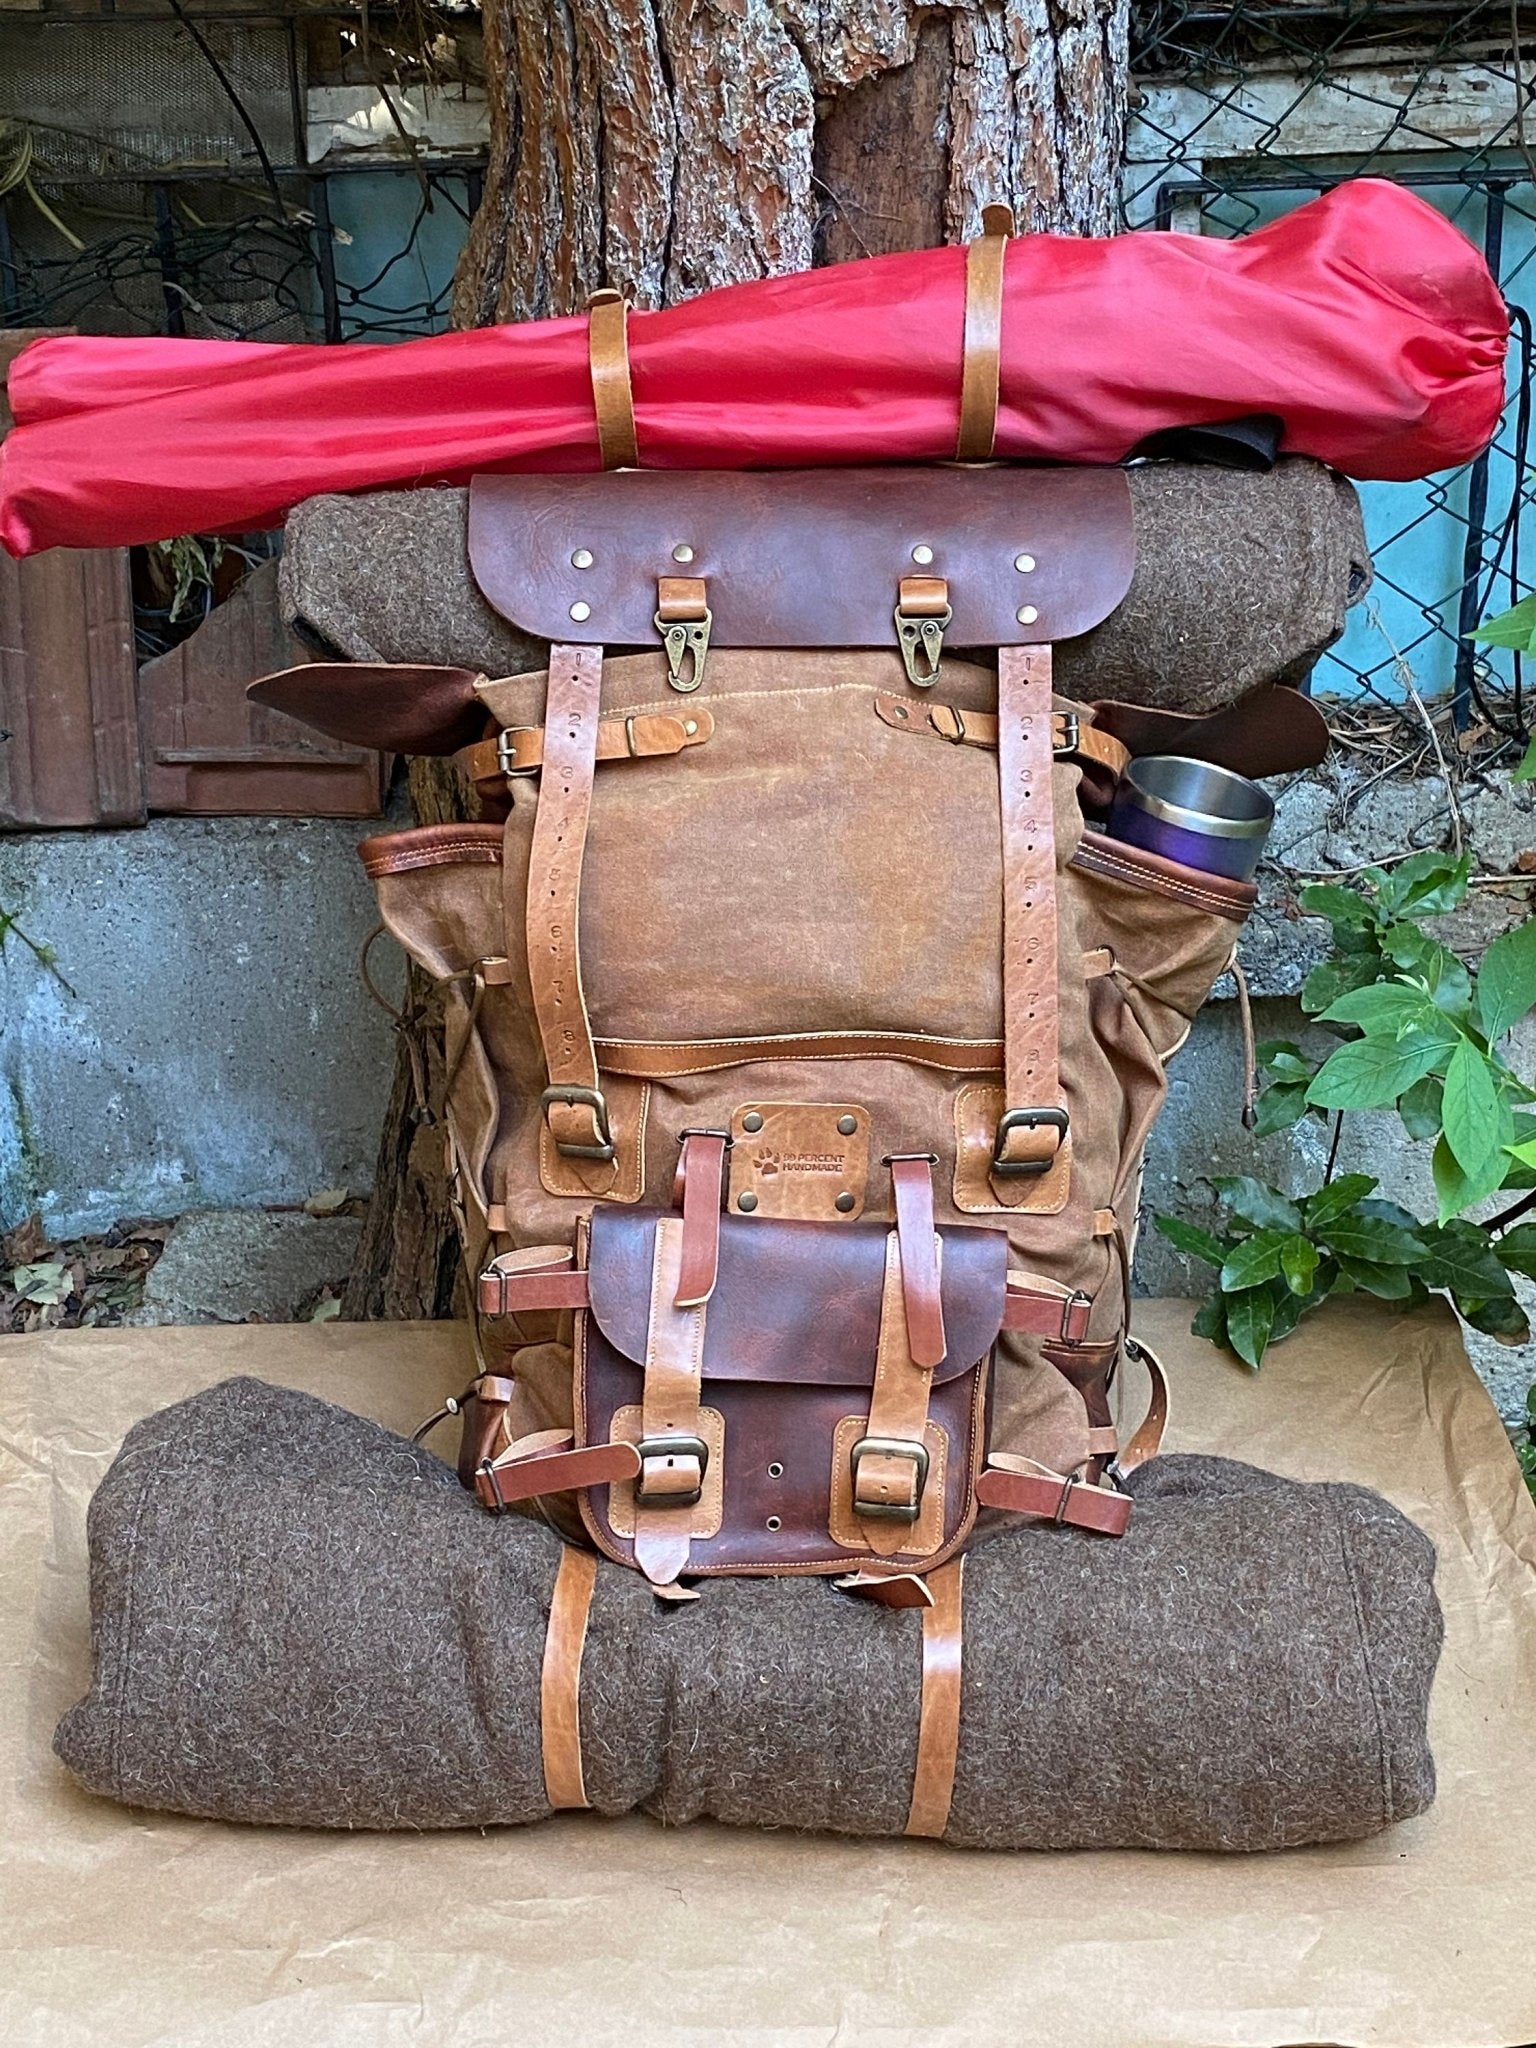 Vintage Leather Backpack | Bag | Waxed Canvas Backpack | Handmade Daypack -  Travel - Camping- Hiking- Bushcraft | Rucksack | Personalization